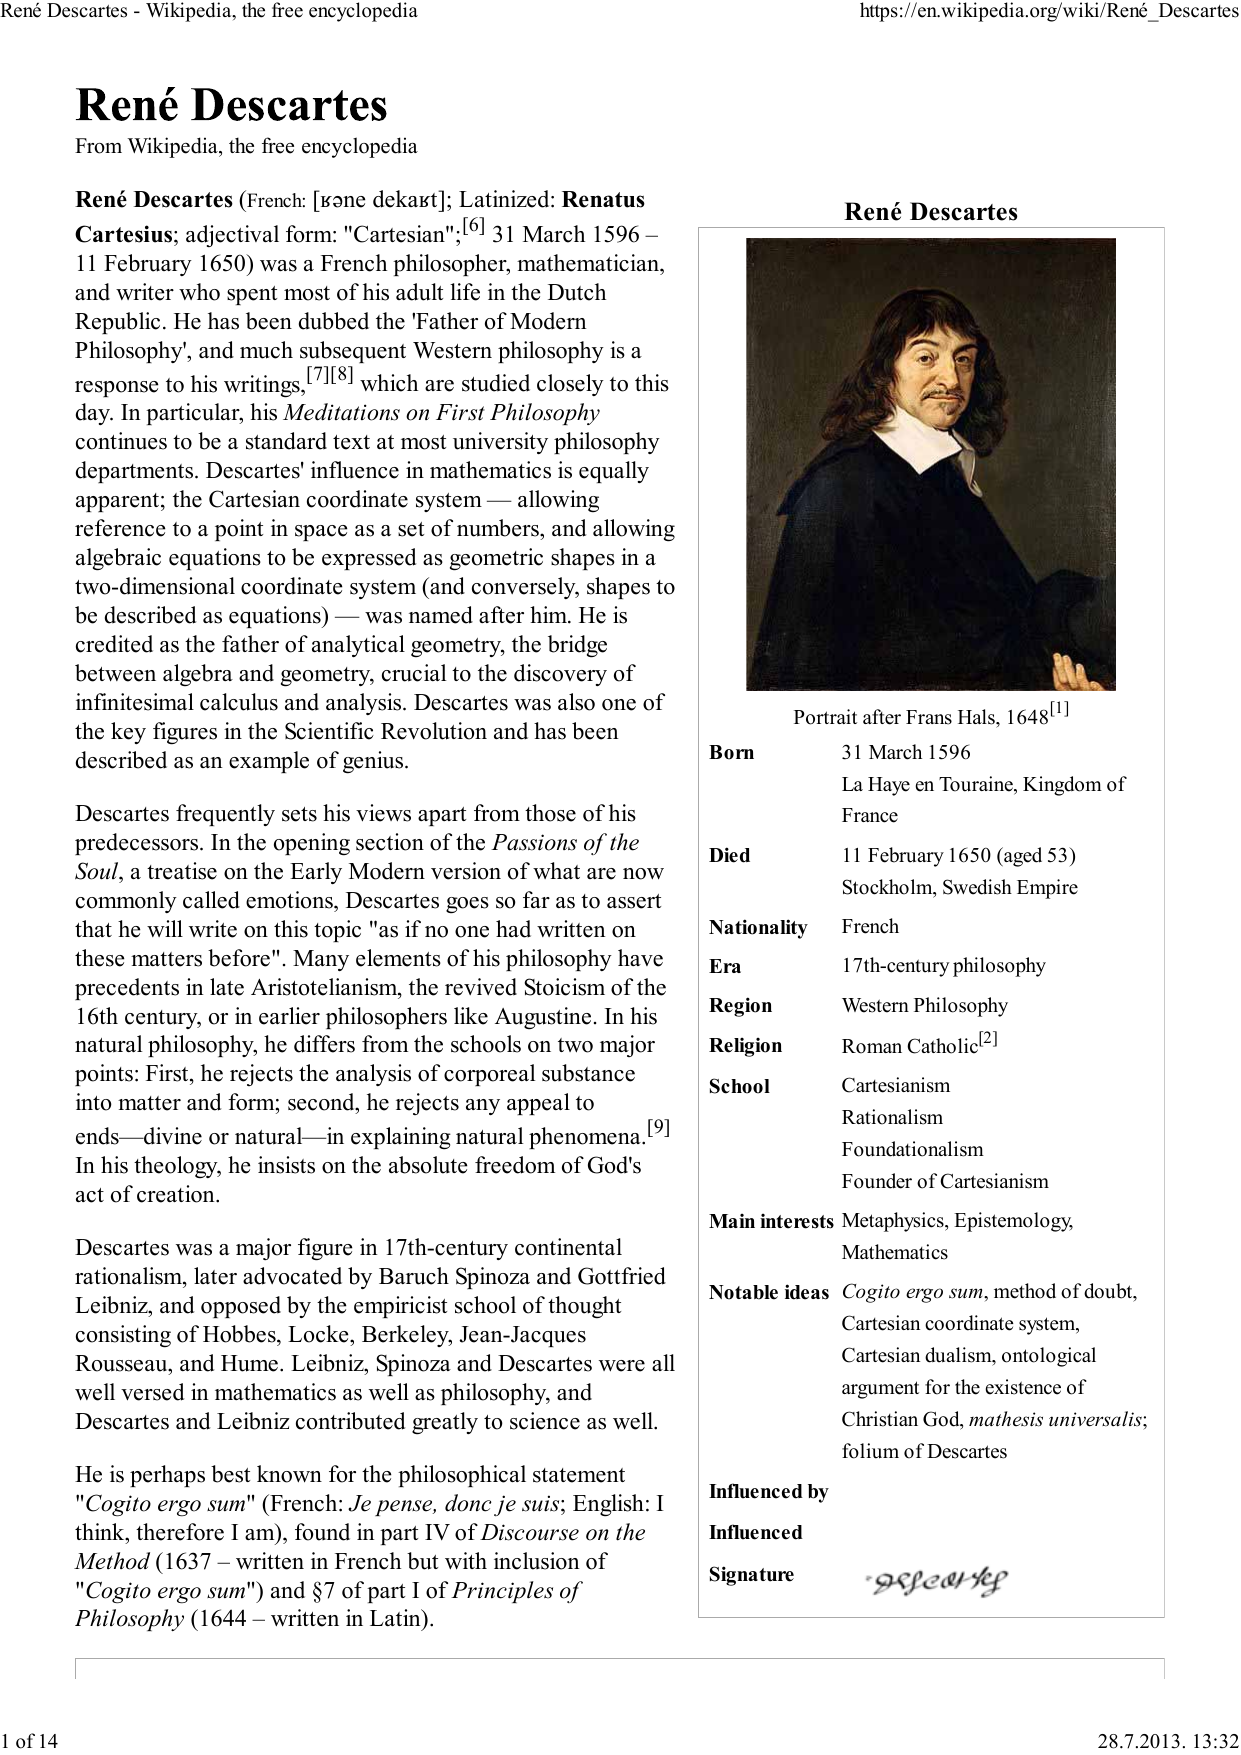 Реферат: Rene Descartes Essay Research Paper Ren